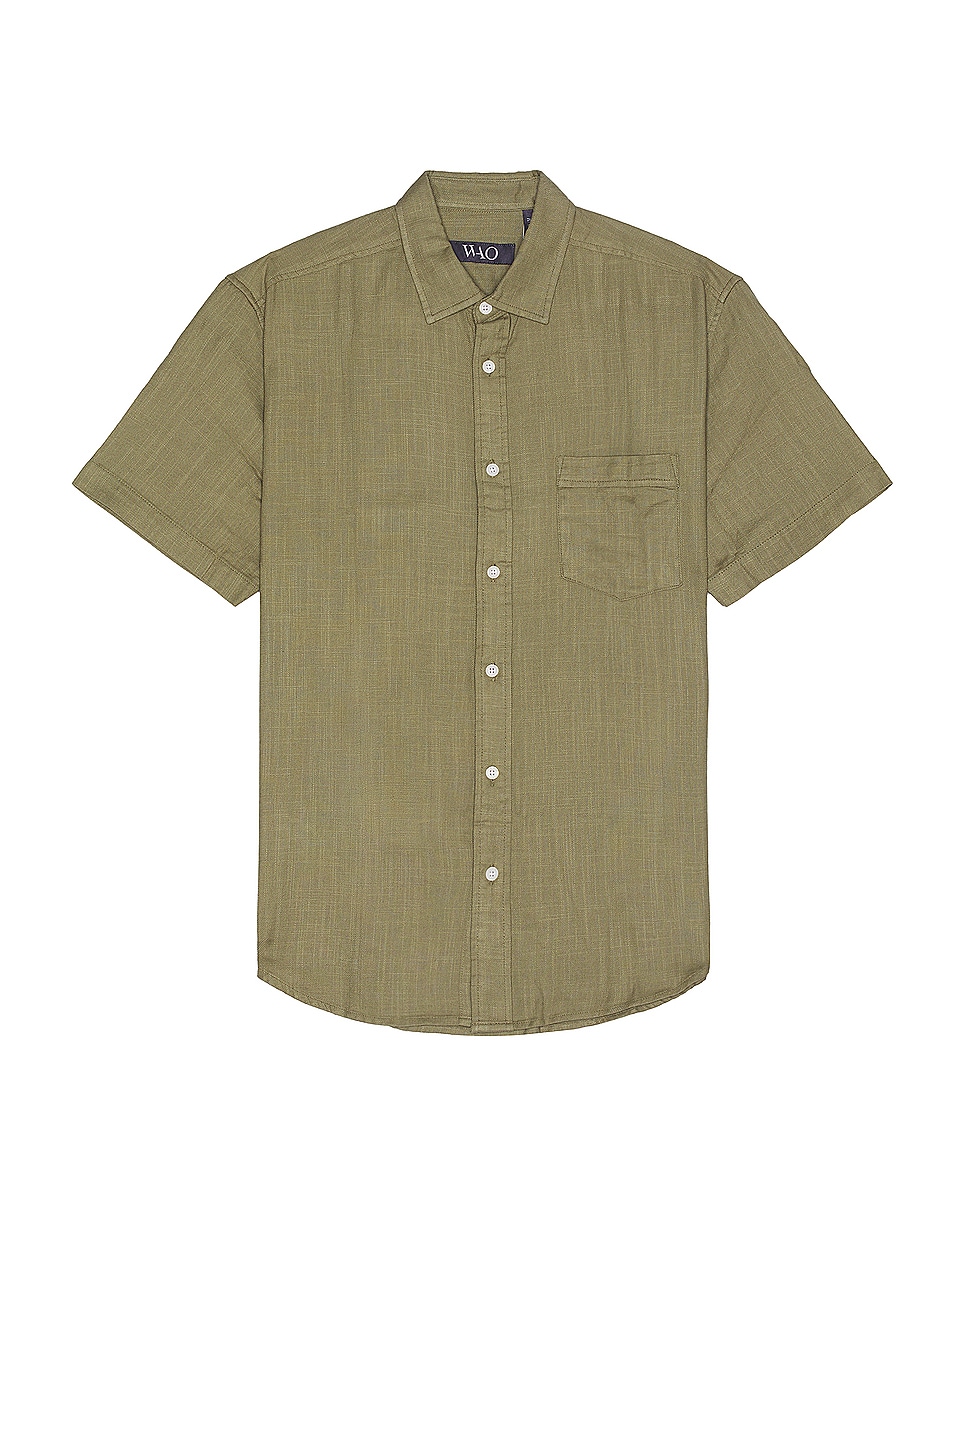 Image 1 of WAO Short Sleeve Slub Shirt in Sage